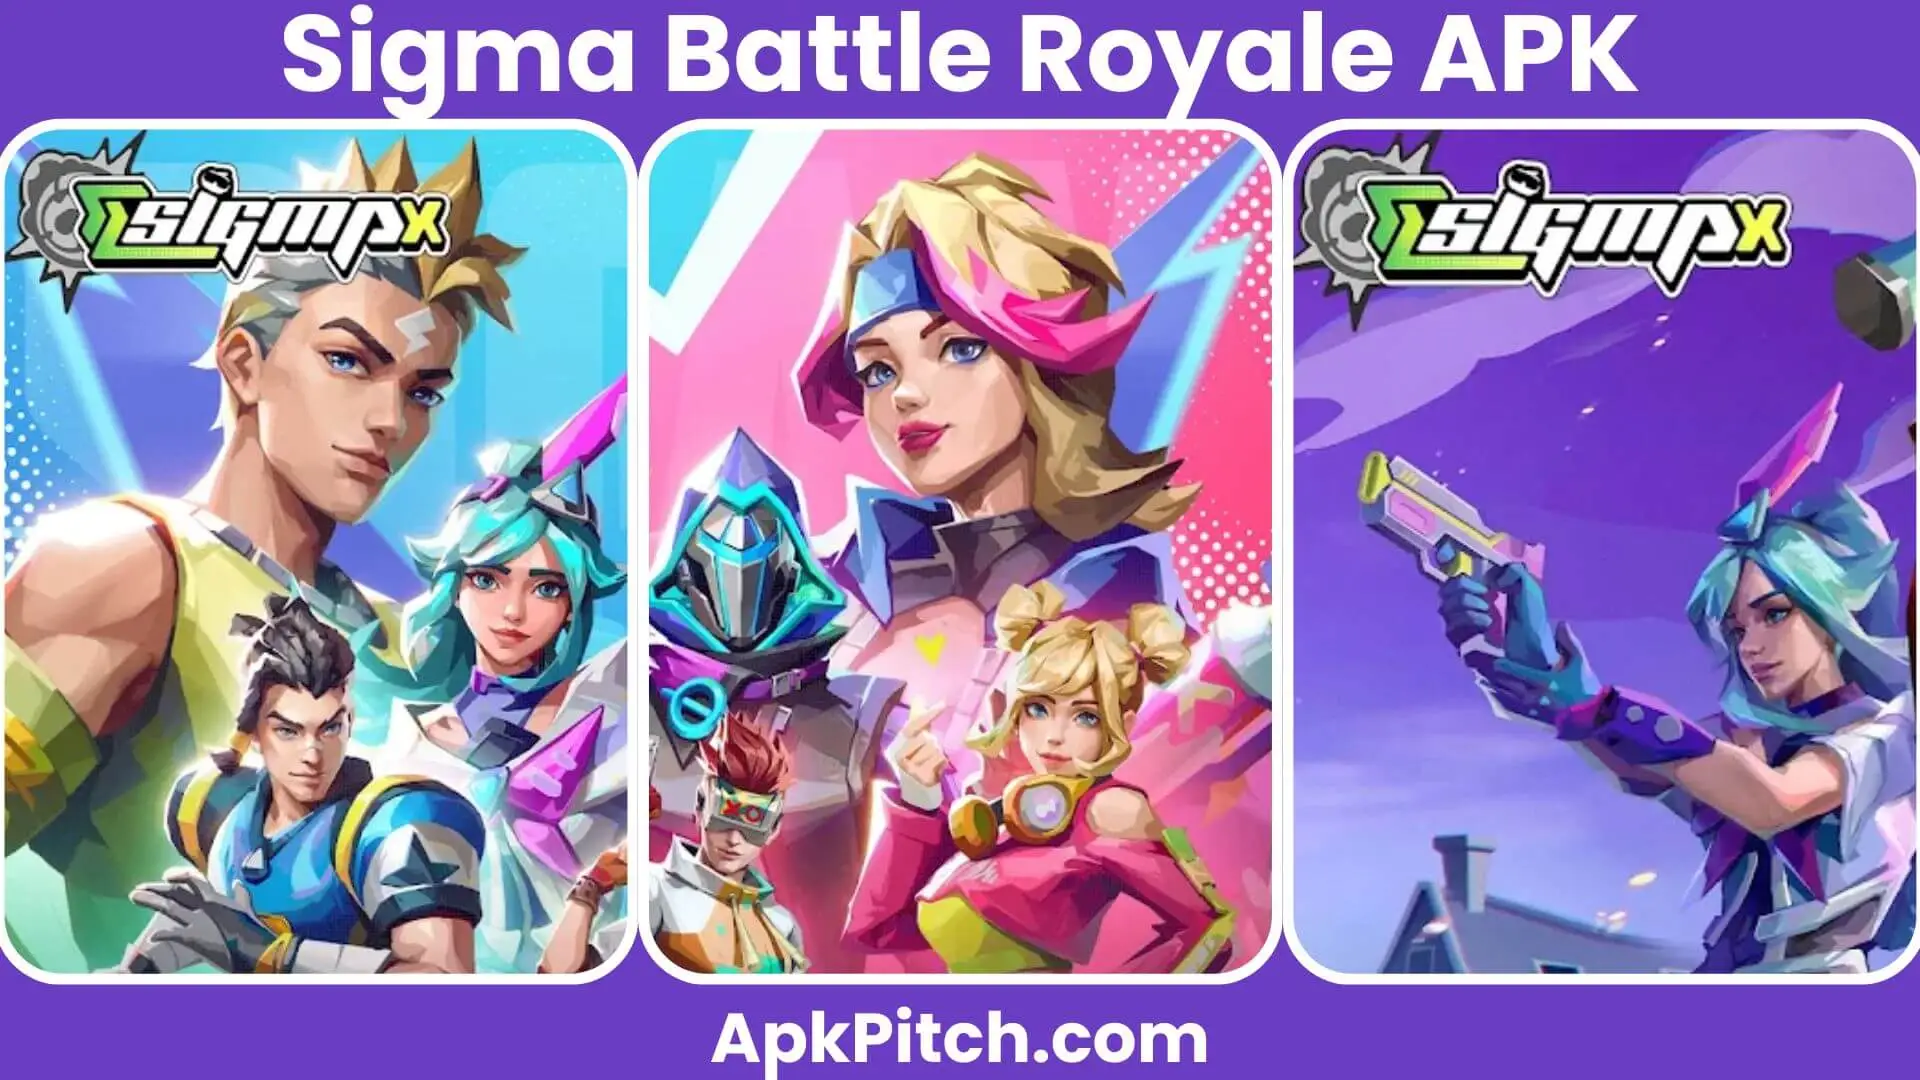 Sigma Battle Royale Download